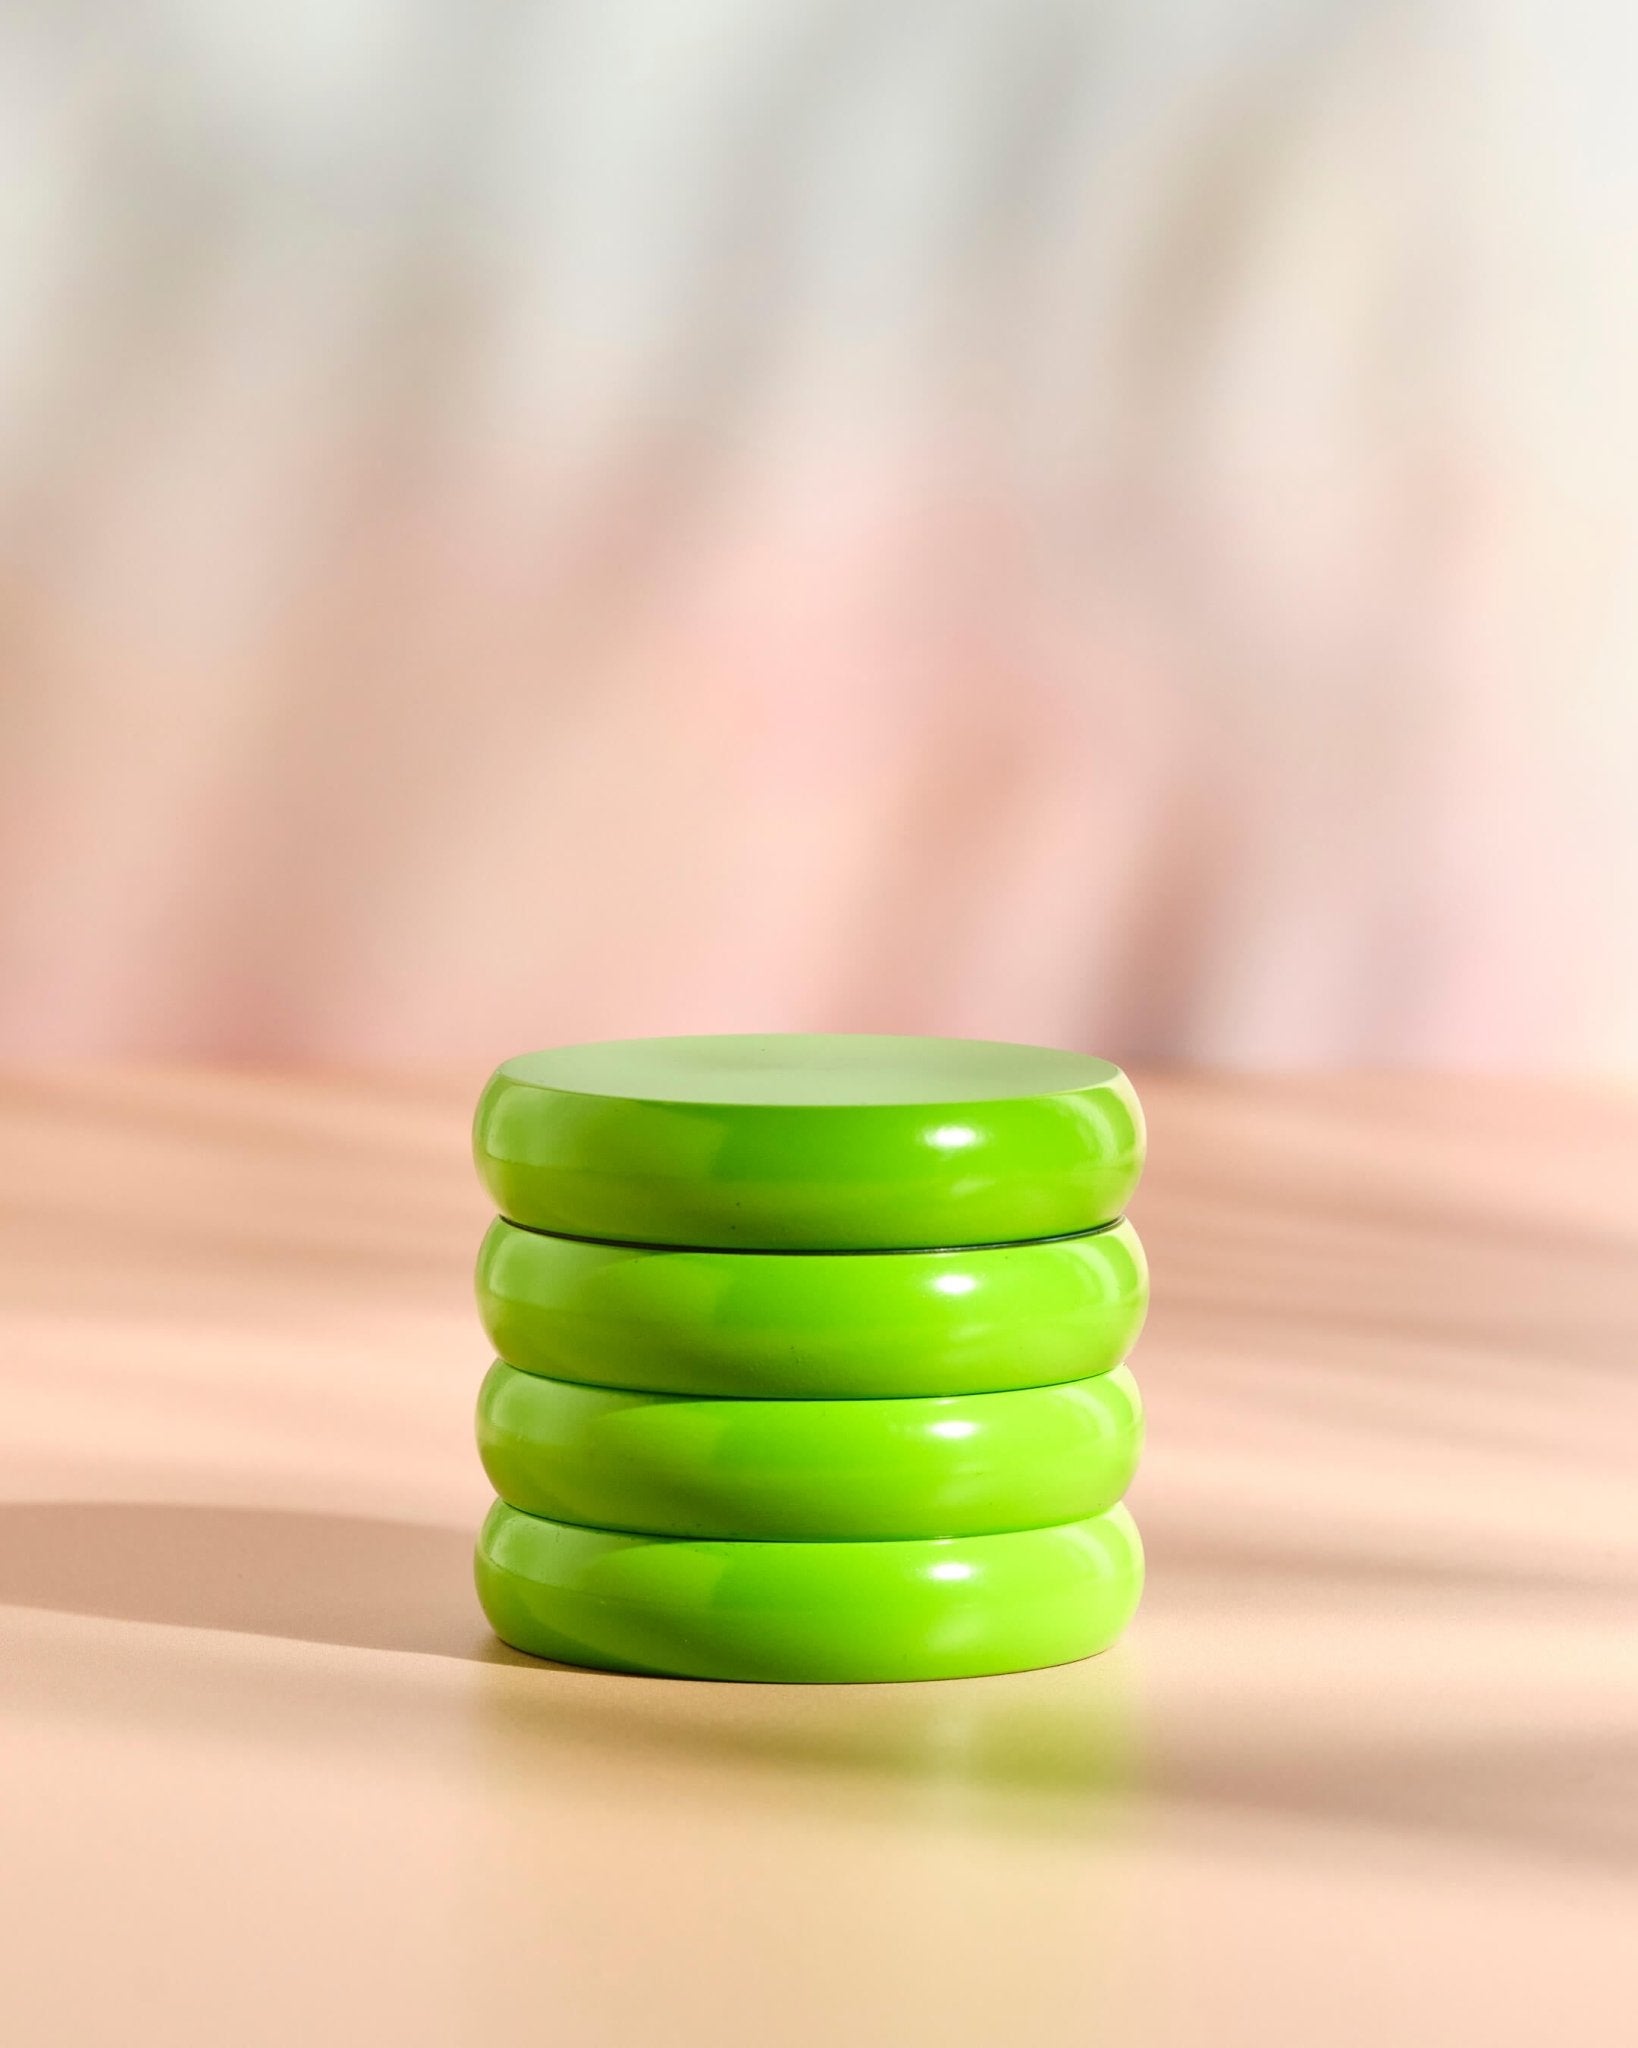 GREEN APPLE WAVY GRINDER - Summer Sunset - ceramic non-stick herb grinder - smooth experience